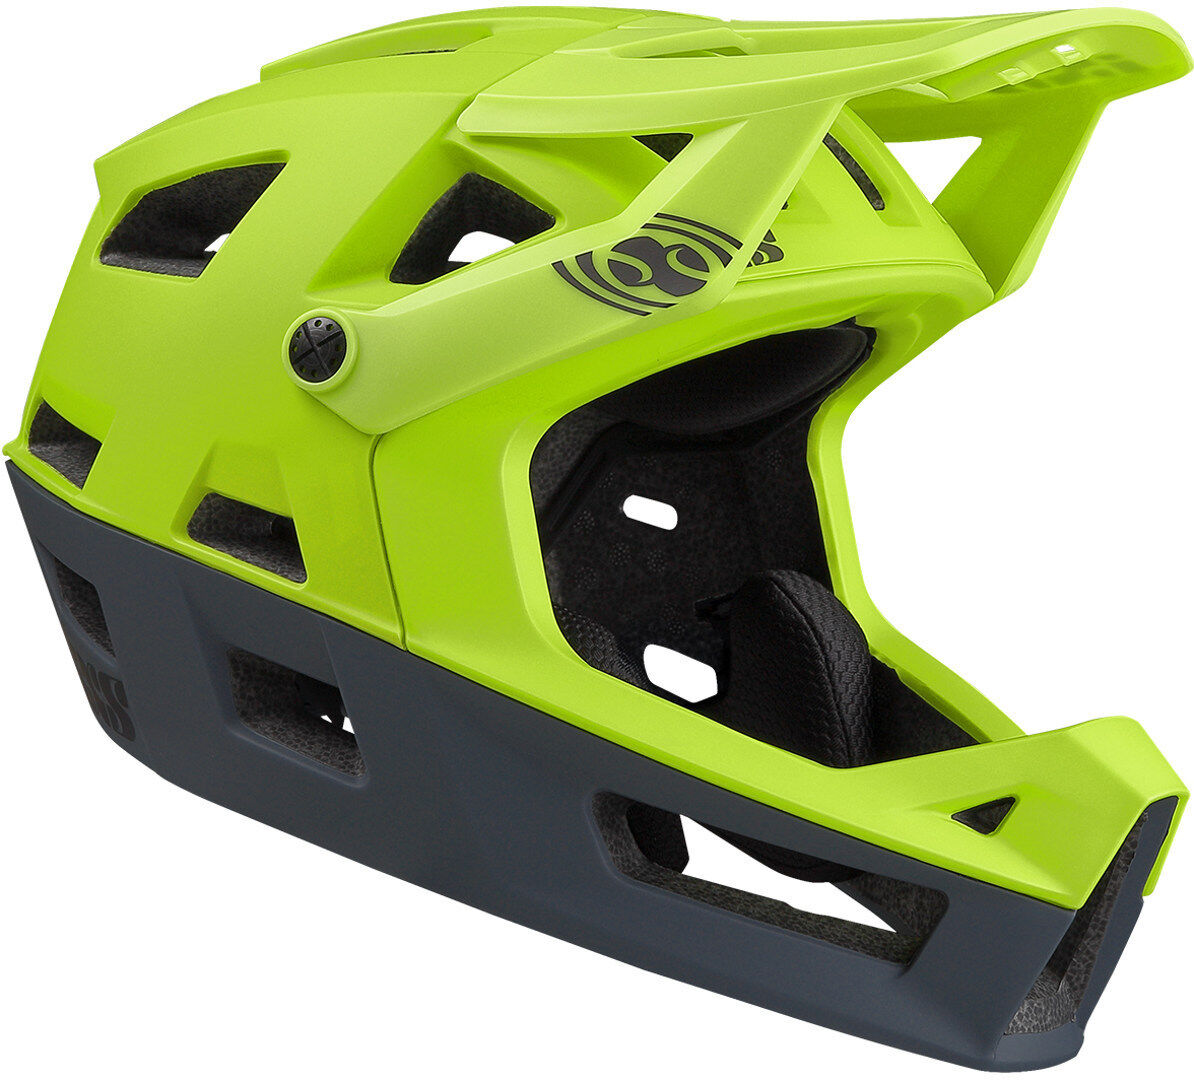 Ixs Trigger Ff Downhill Helmet  - Green